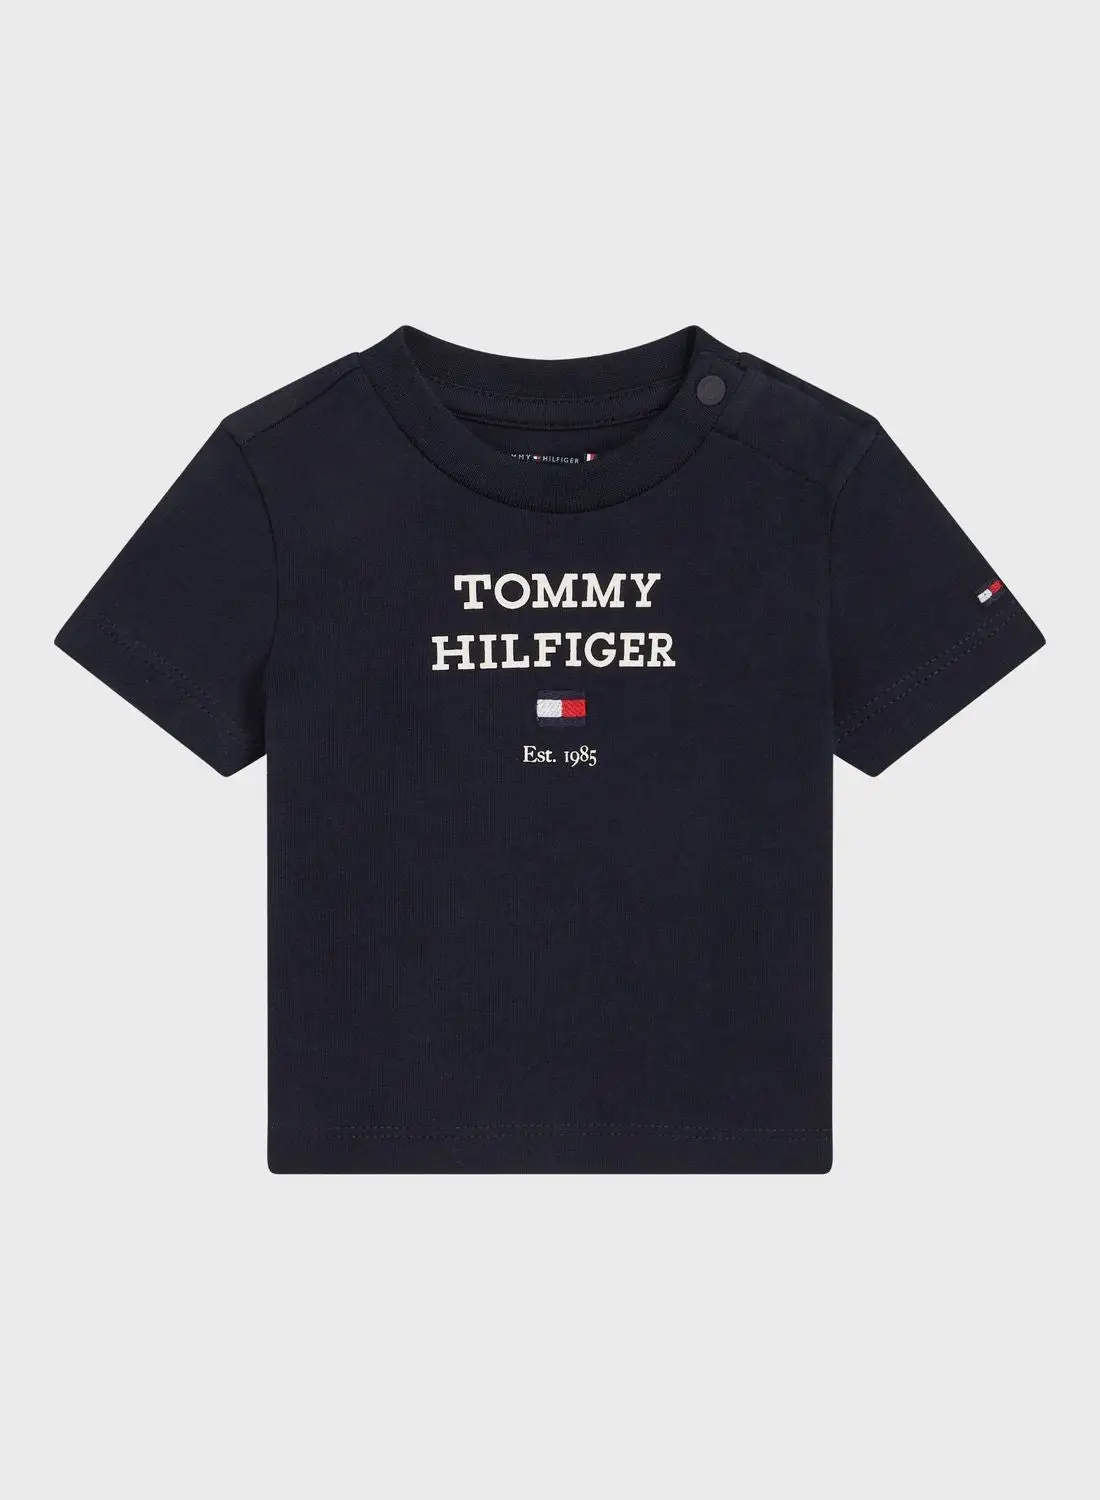 TOMMY HILFIGER Kids Logo Crew Neck T-Shirt